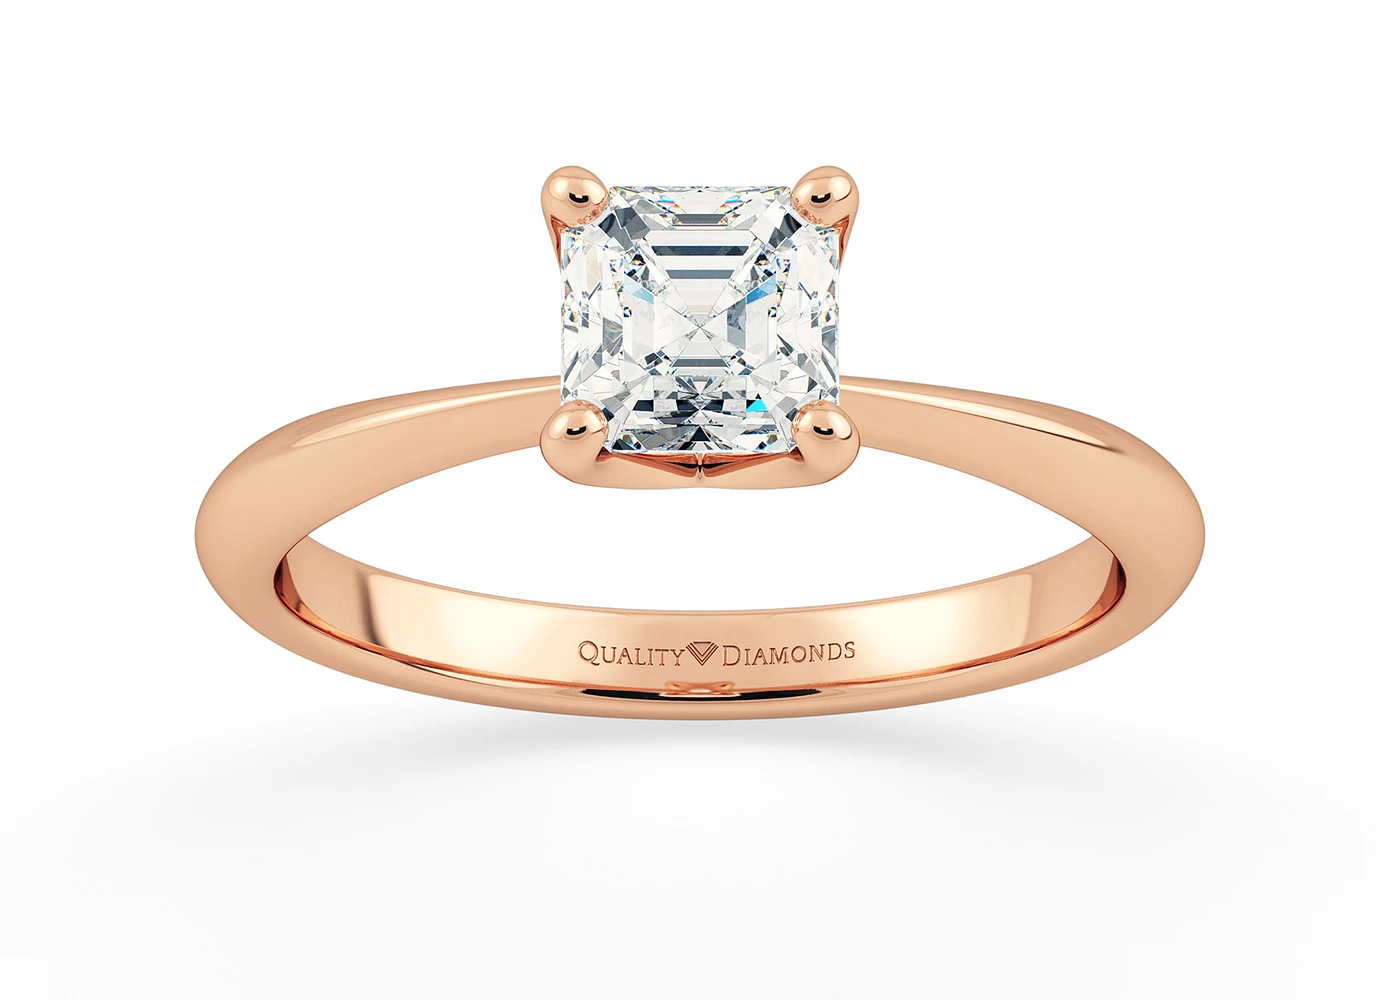 Half Carat Asscher Solitaire Diamond Engagement Ring in 18K Rose Gold